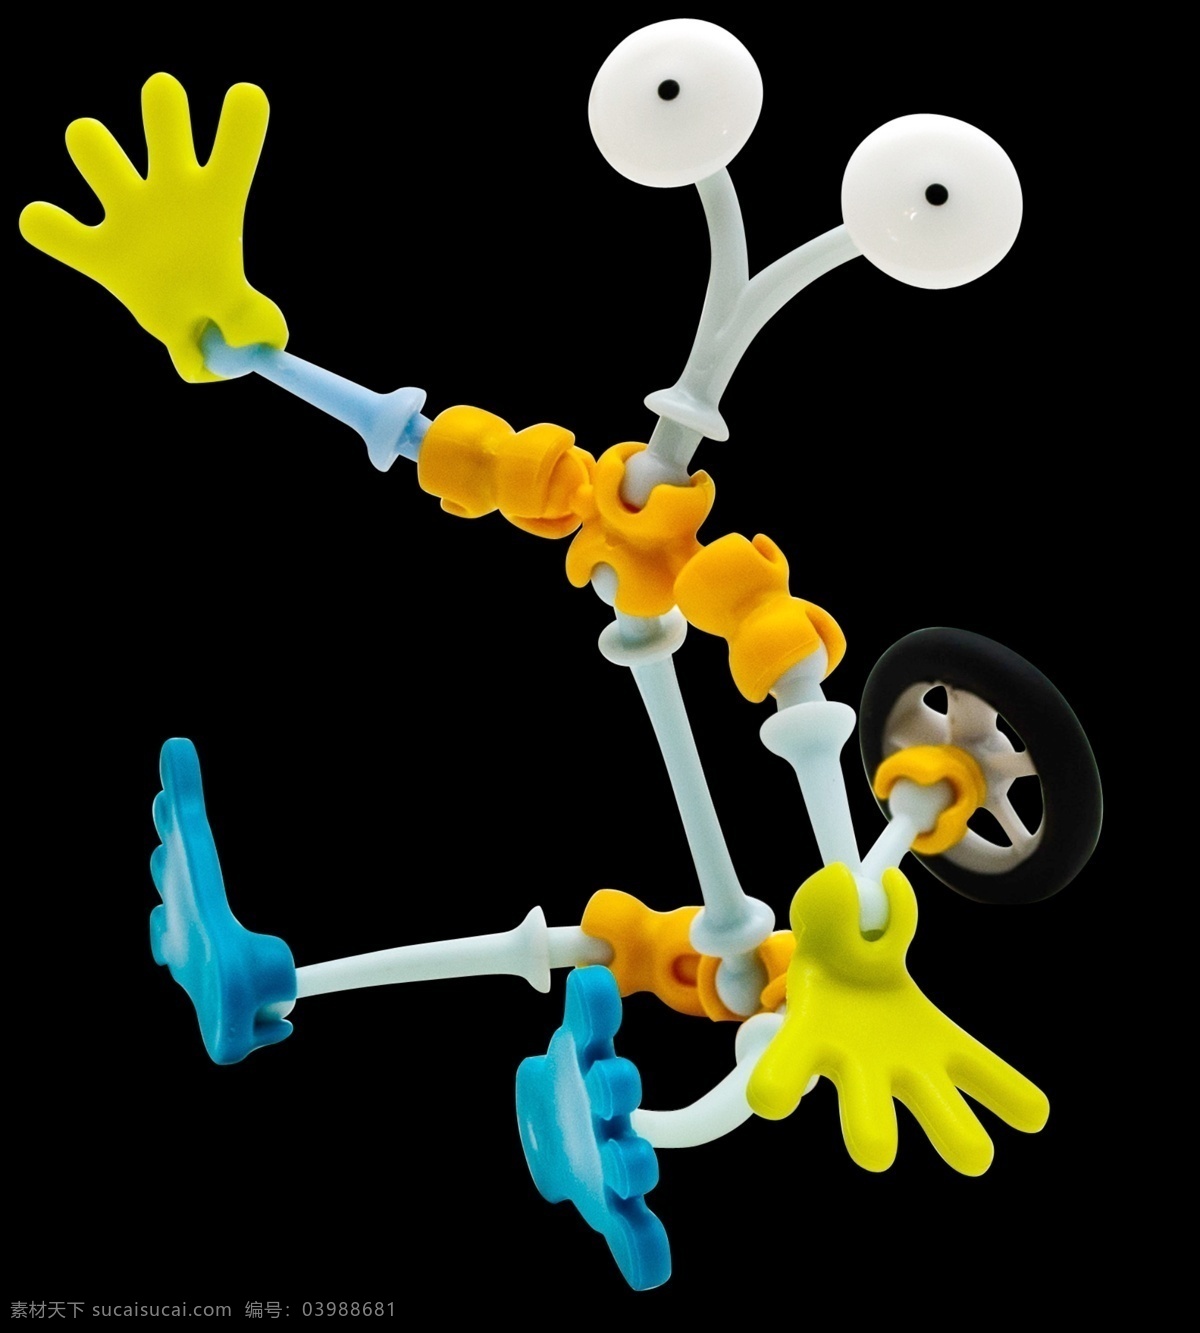 y连接器 画报 建筑 玩具 3d打印模型 游戏玩具模型 balljoint 连接器 奥戈 ogobild ogosport 分裂 y